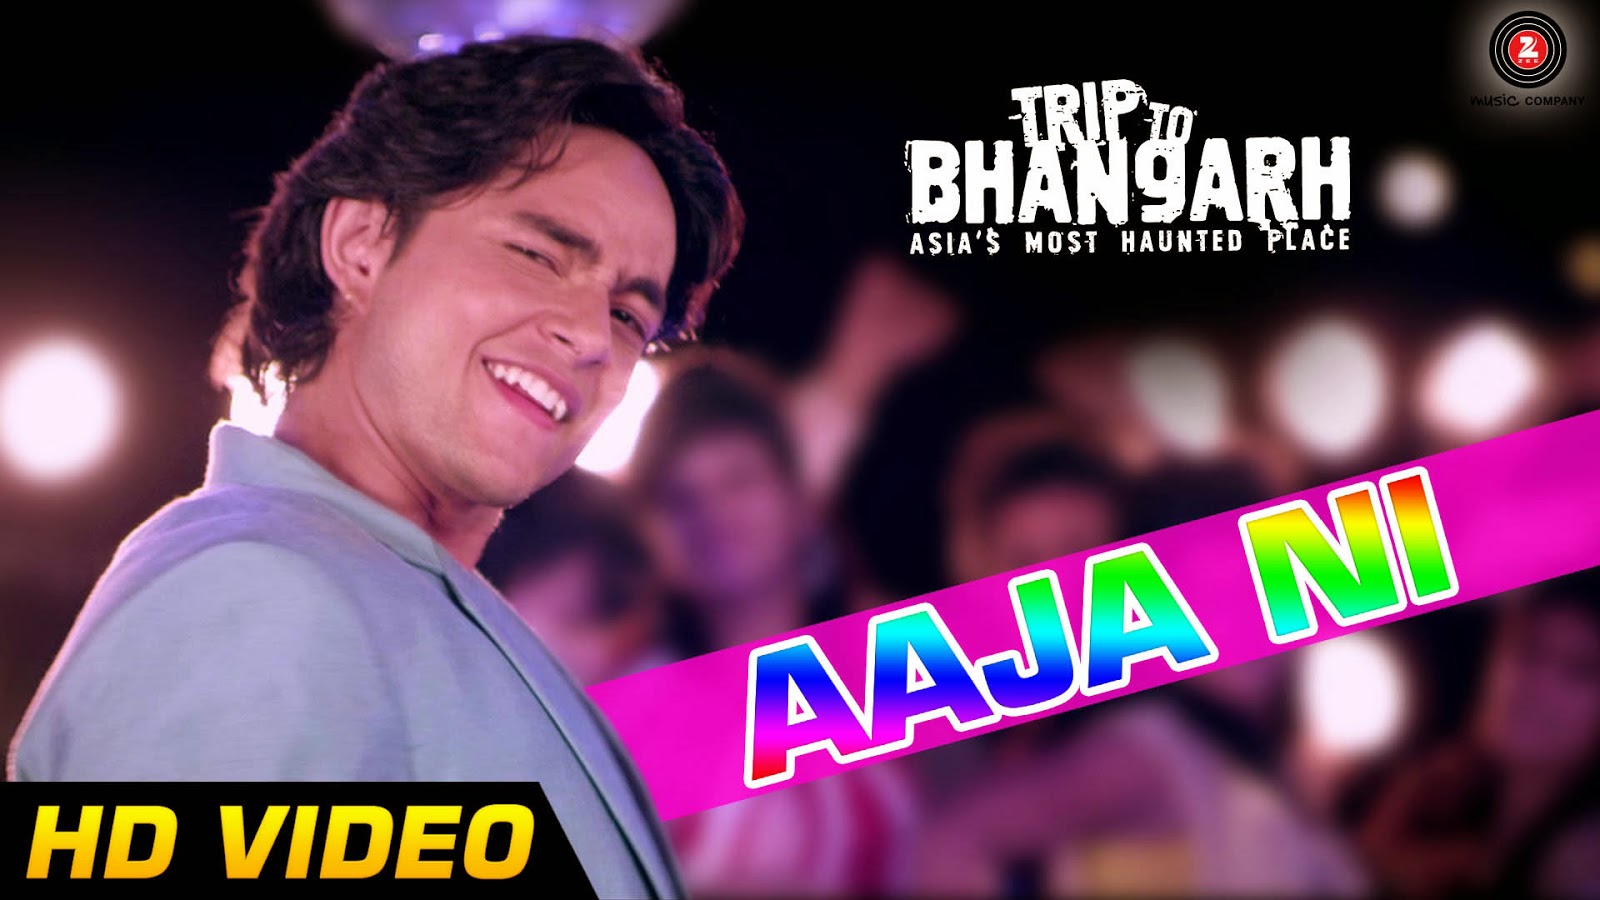 Aaja Ni Official Music Video,Aaja Ni  Full Video Song, Aaja Ni  Hindi Movie Video Song, Download Aaja Ni  Video Song, Aaja Ni  HD Music Video, Aaja Ni  Trip To Bhangarh (2014)  Movie Video Song, Download Trip To Bhangarh (2014) Movie Video Song